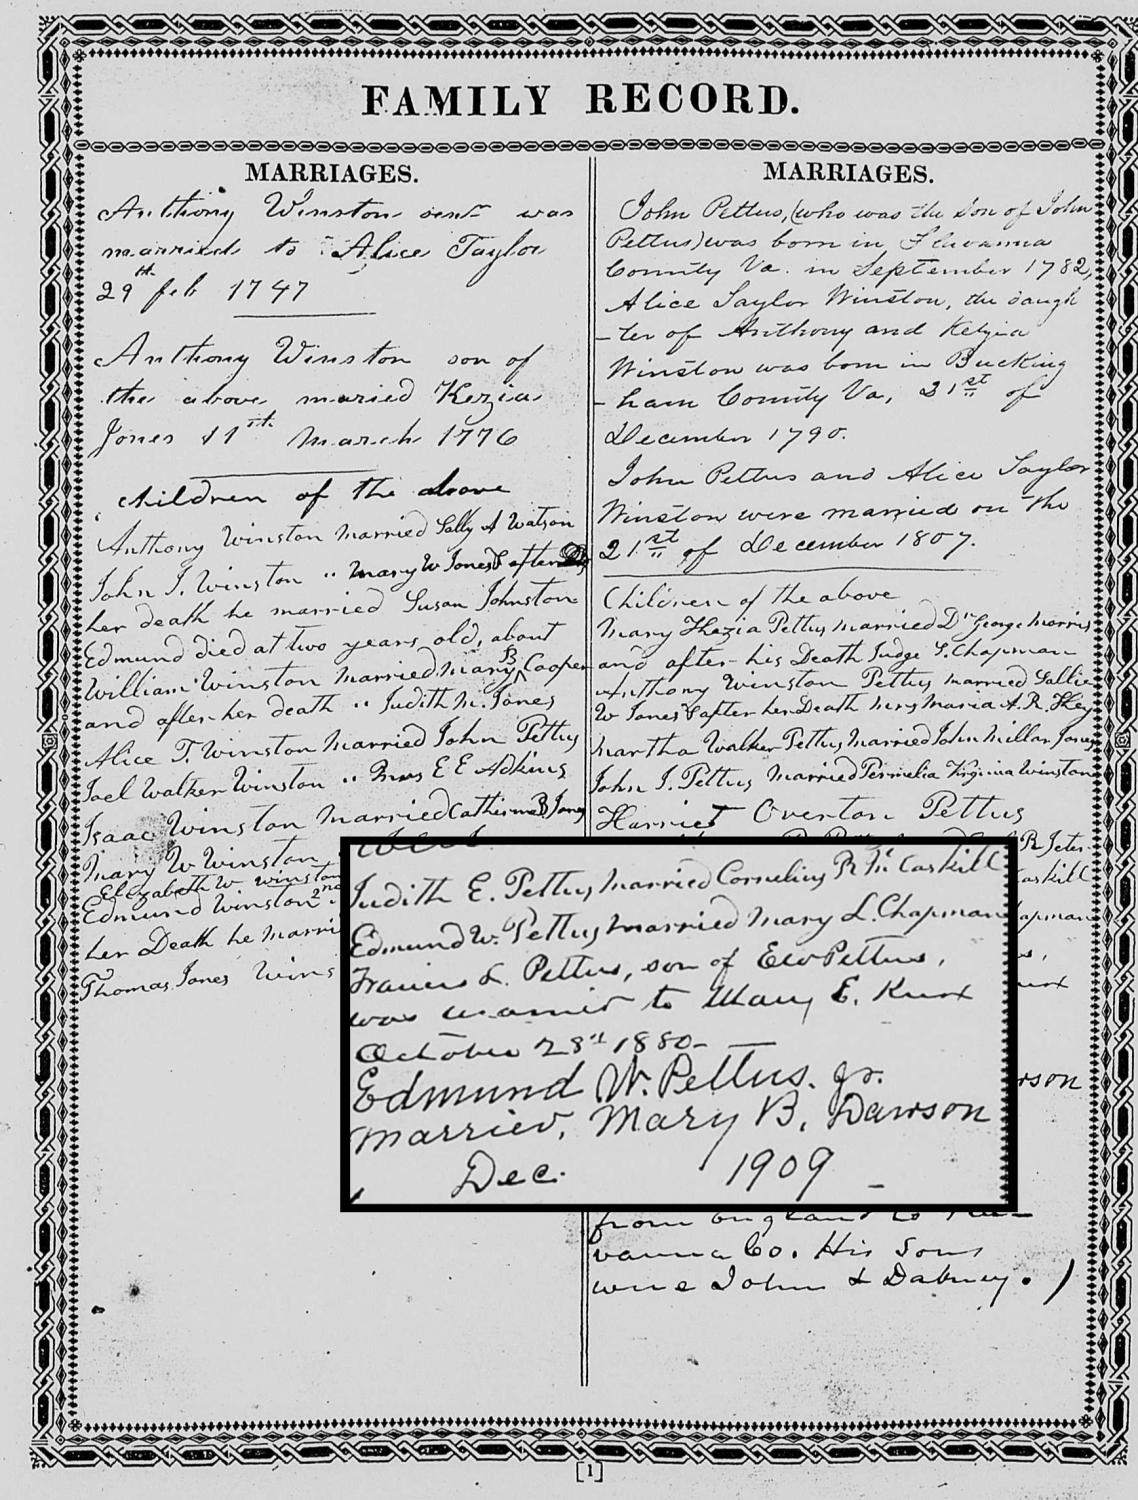 Edmund Pettus Family Bible Record from Alabama